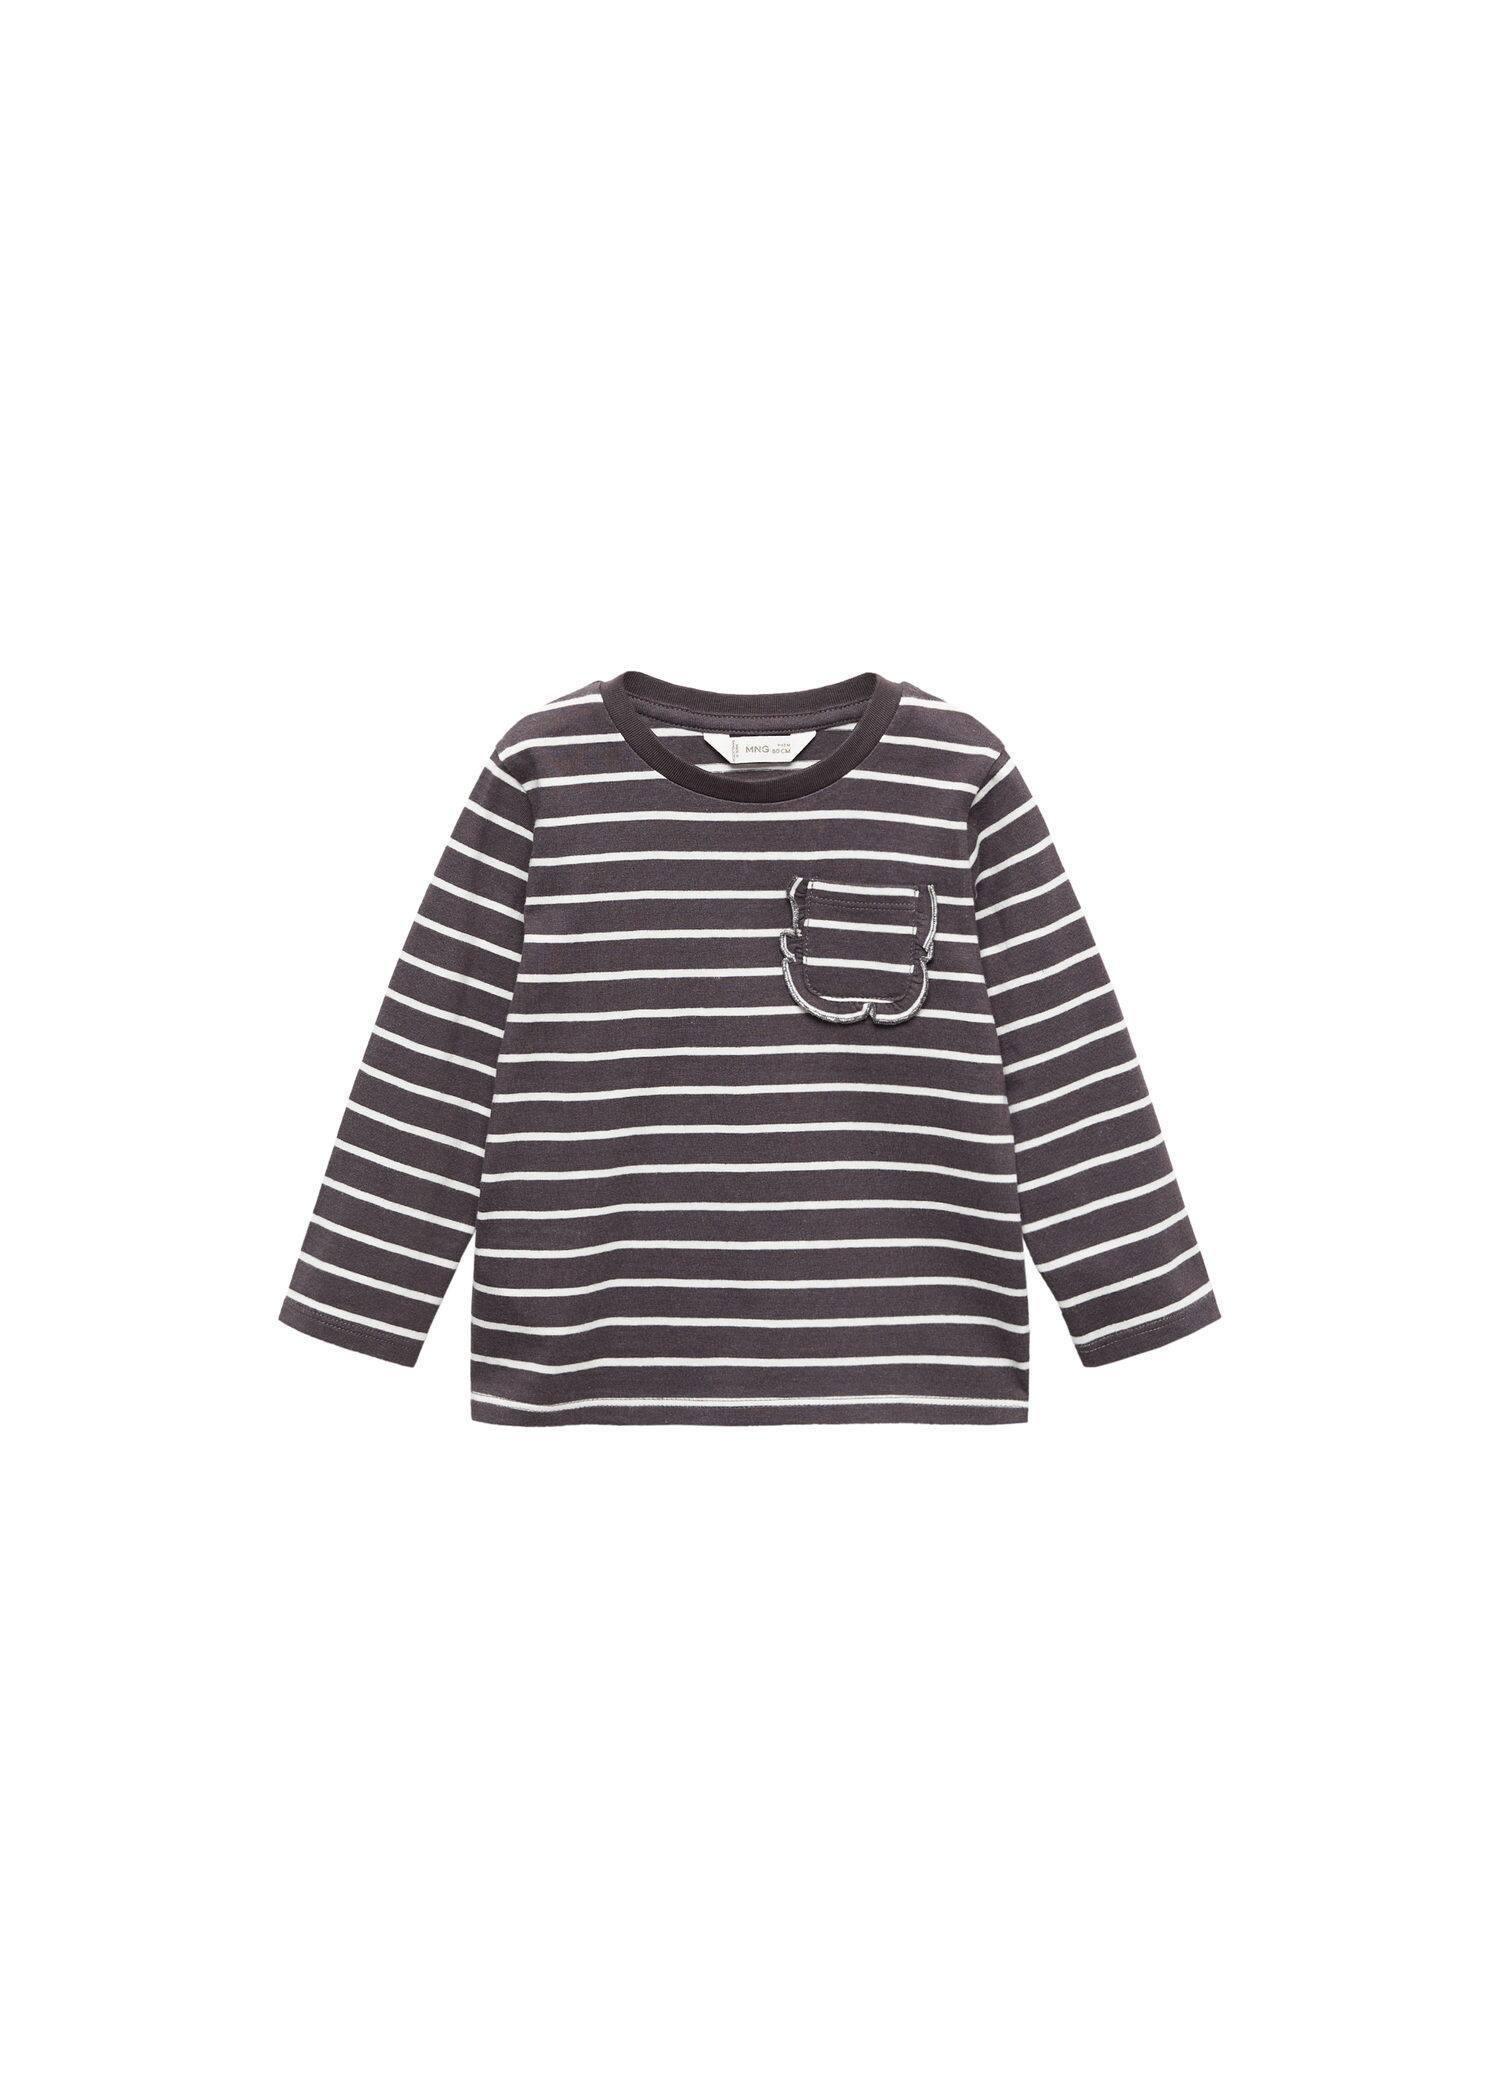 Mango - Grey Striped Long Sleeves T-Shirt, Kids Girls